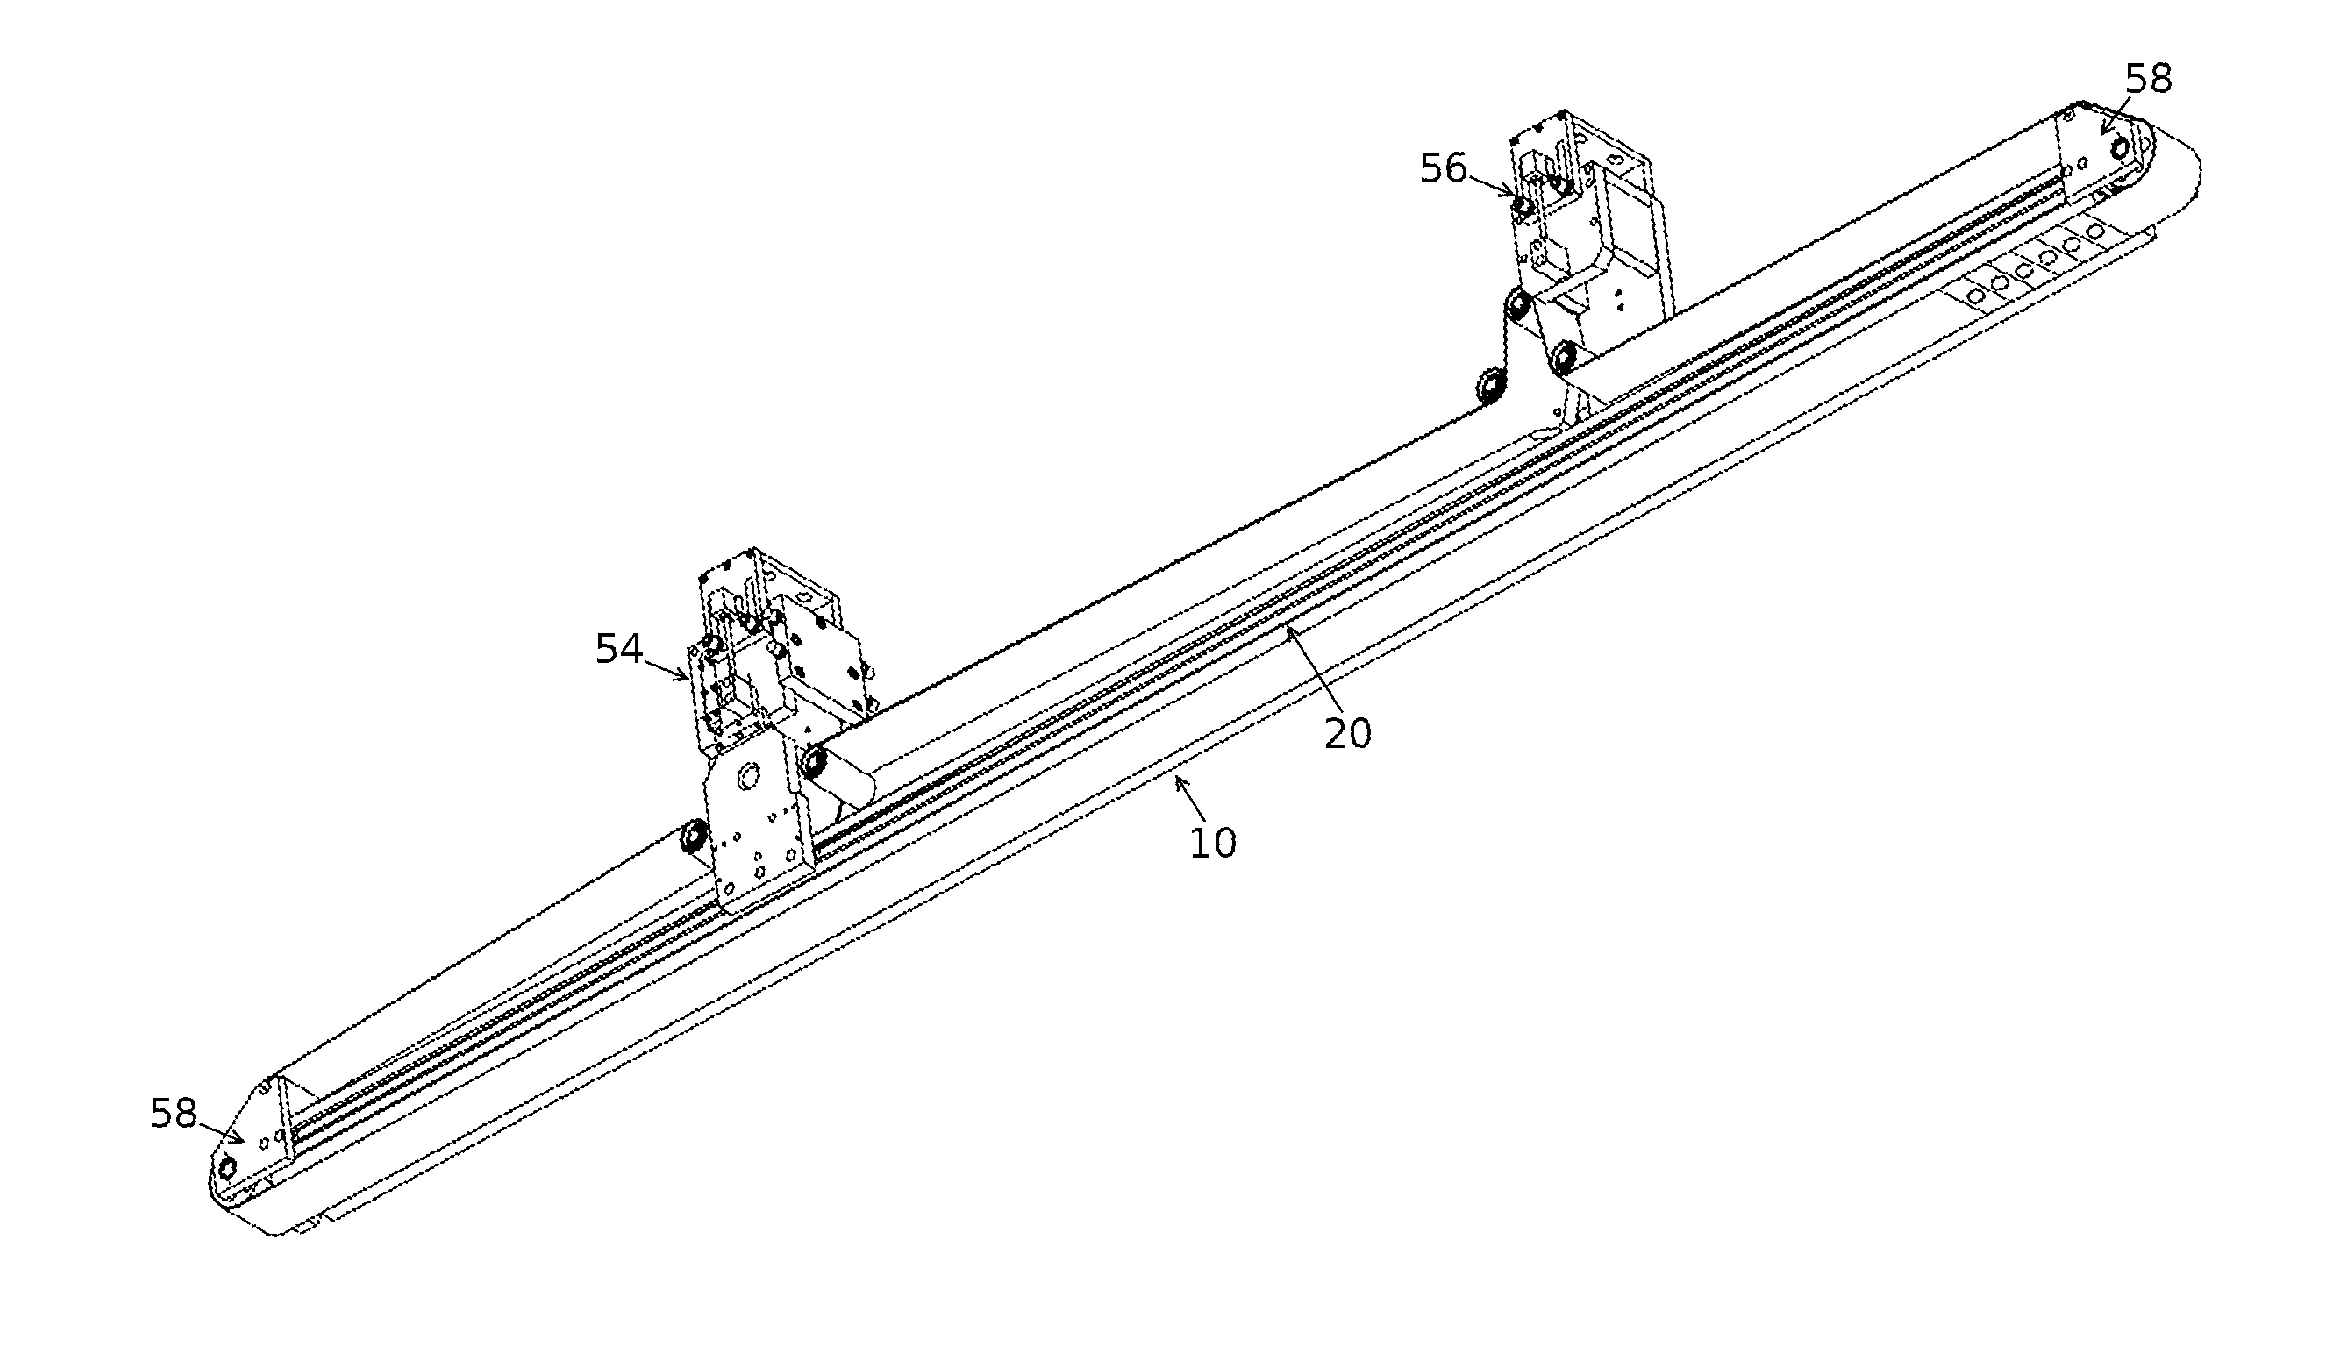 Inverted Vacuum Belt Conveyor System